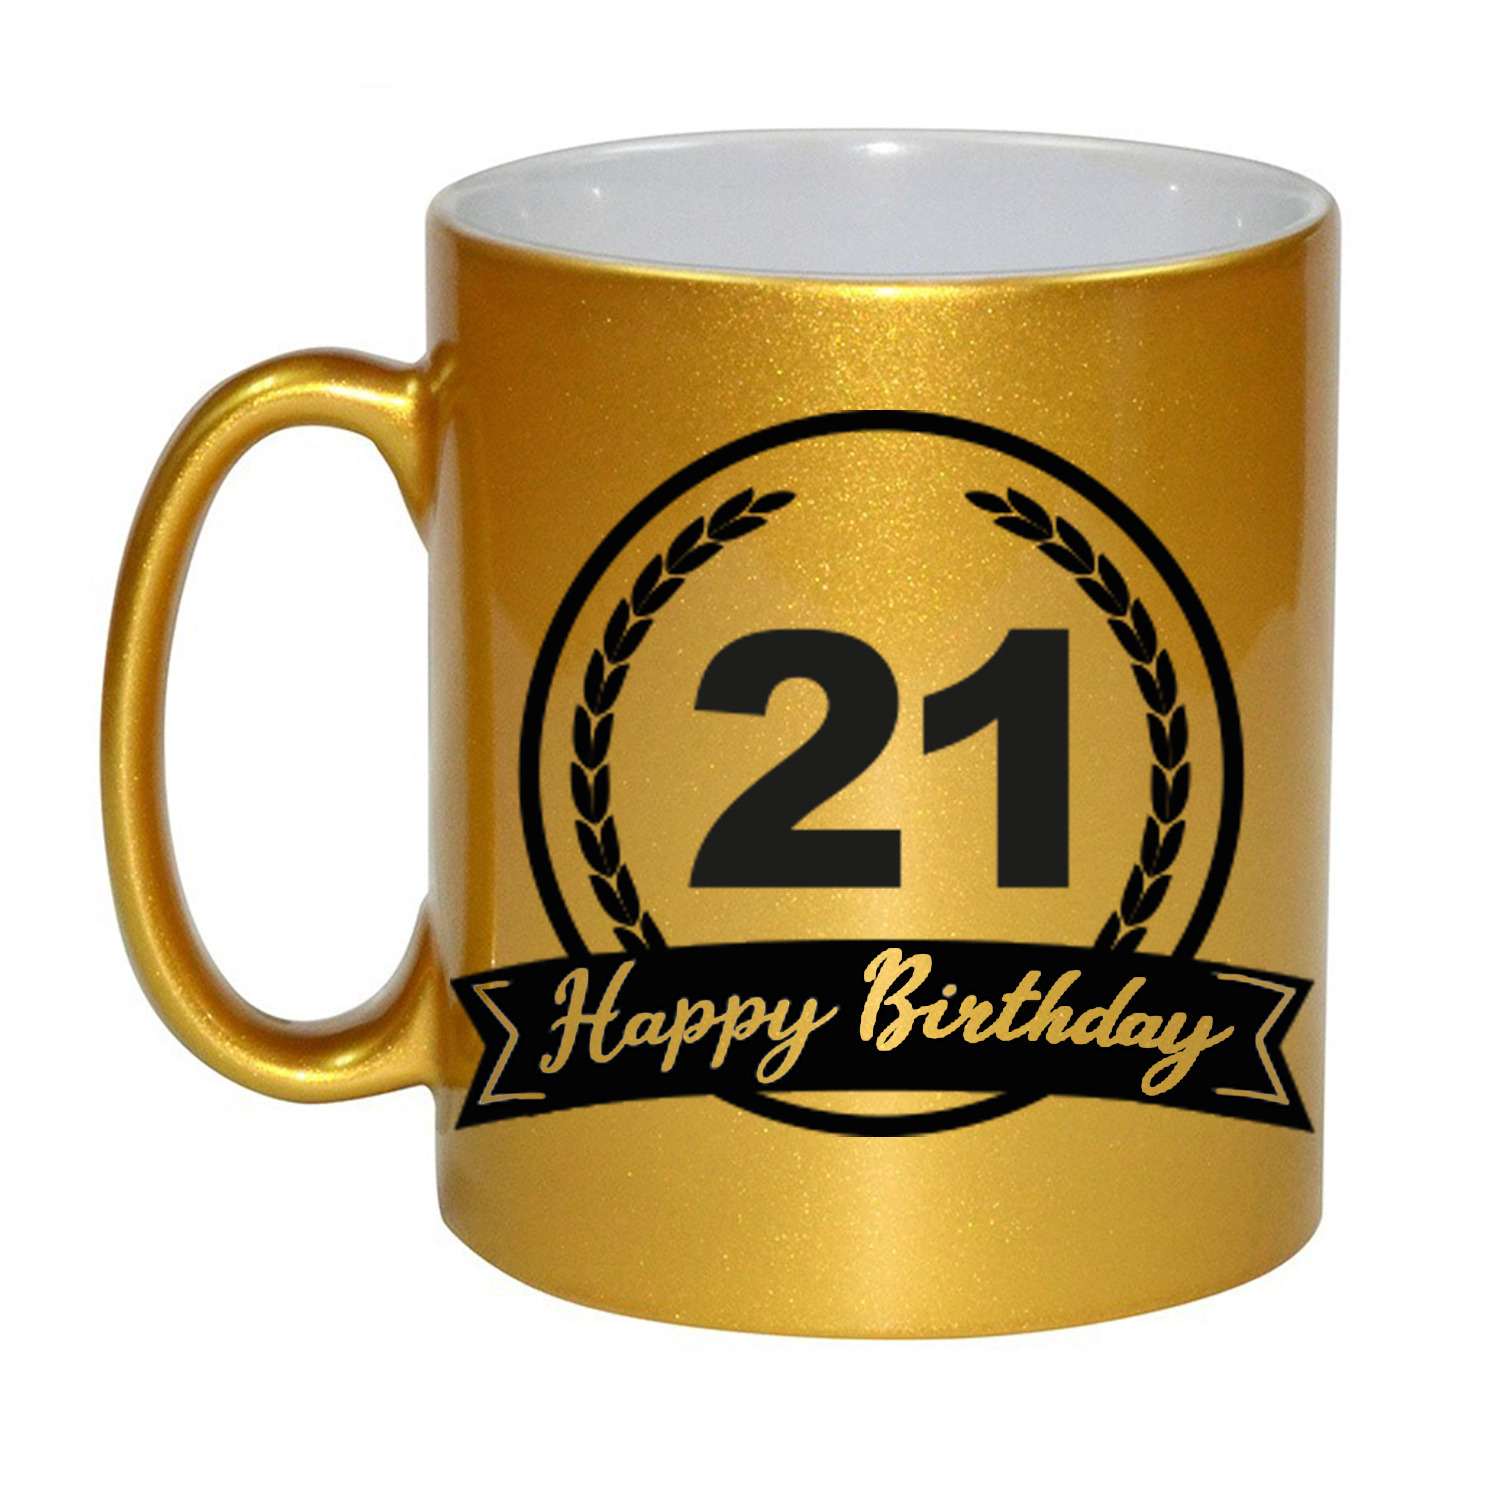 Happy Birthday 21 years gouden cadeau mok / beker met wimpel 330 ml